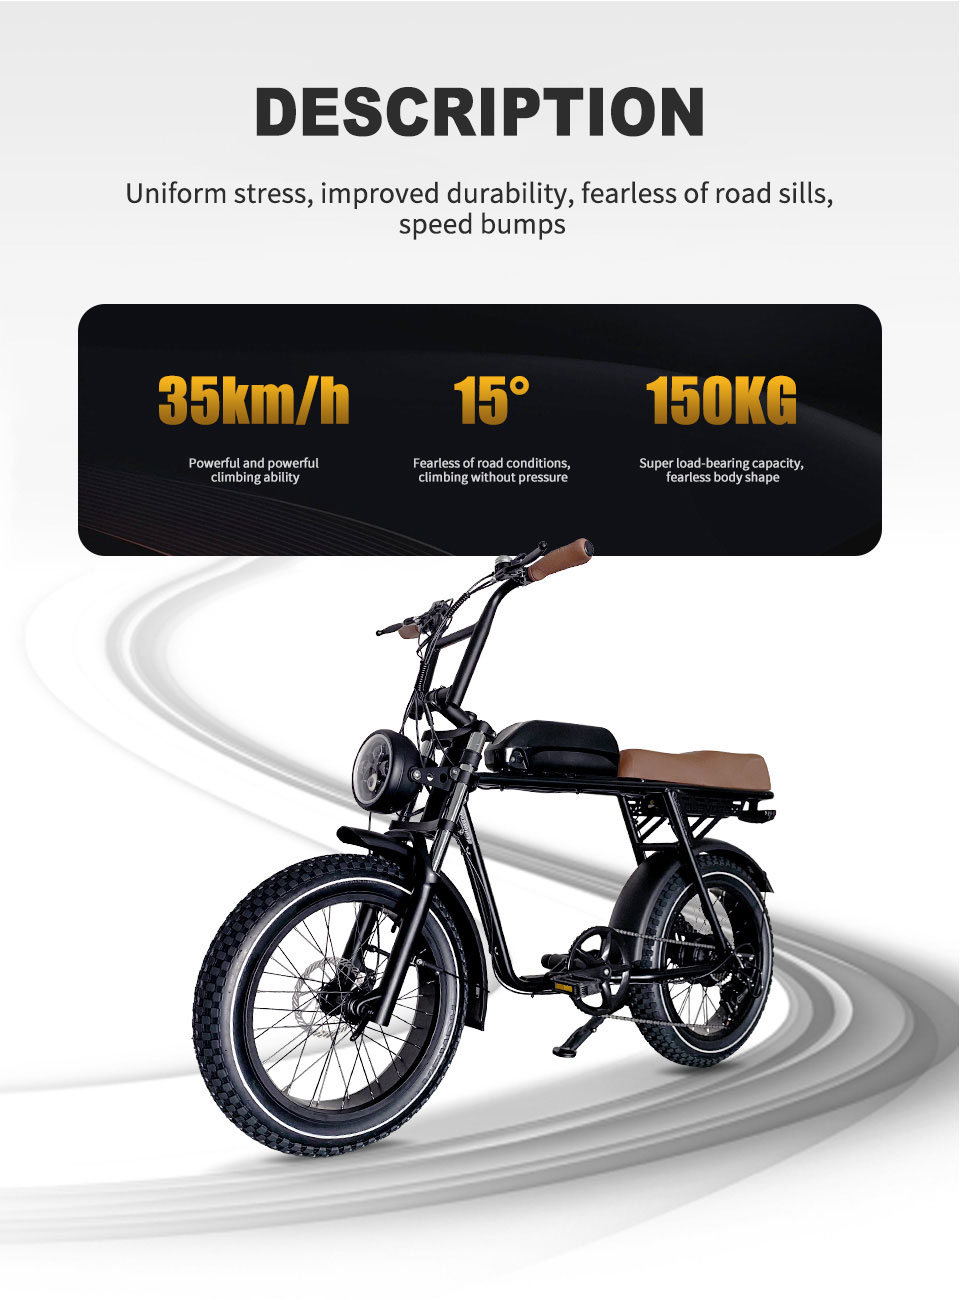 2206 350W-1000W 48V 10,4Ah14Ah 35kmh ličio baterijos elektrinis dviratis, detalė05